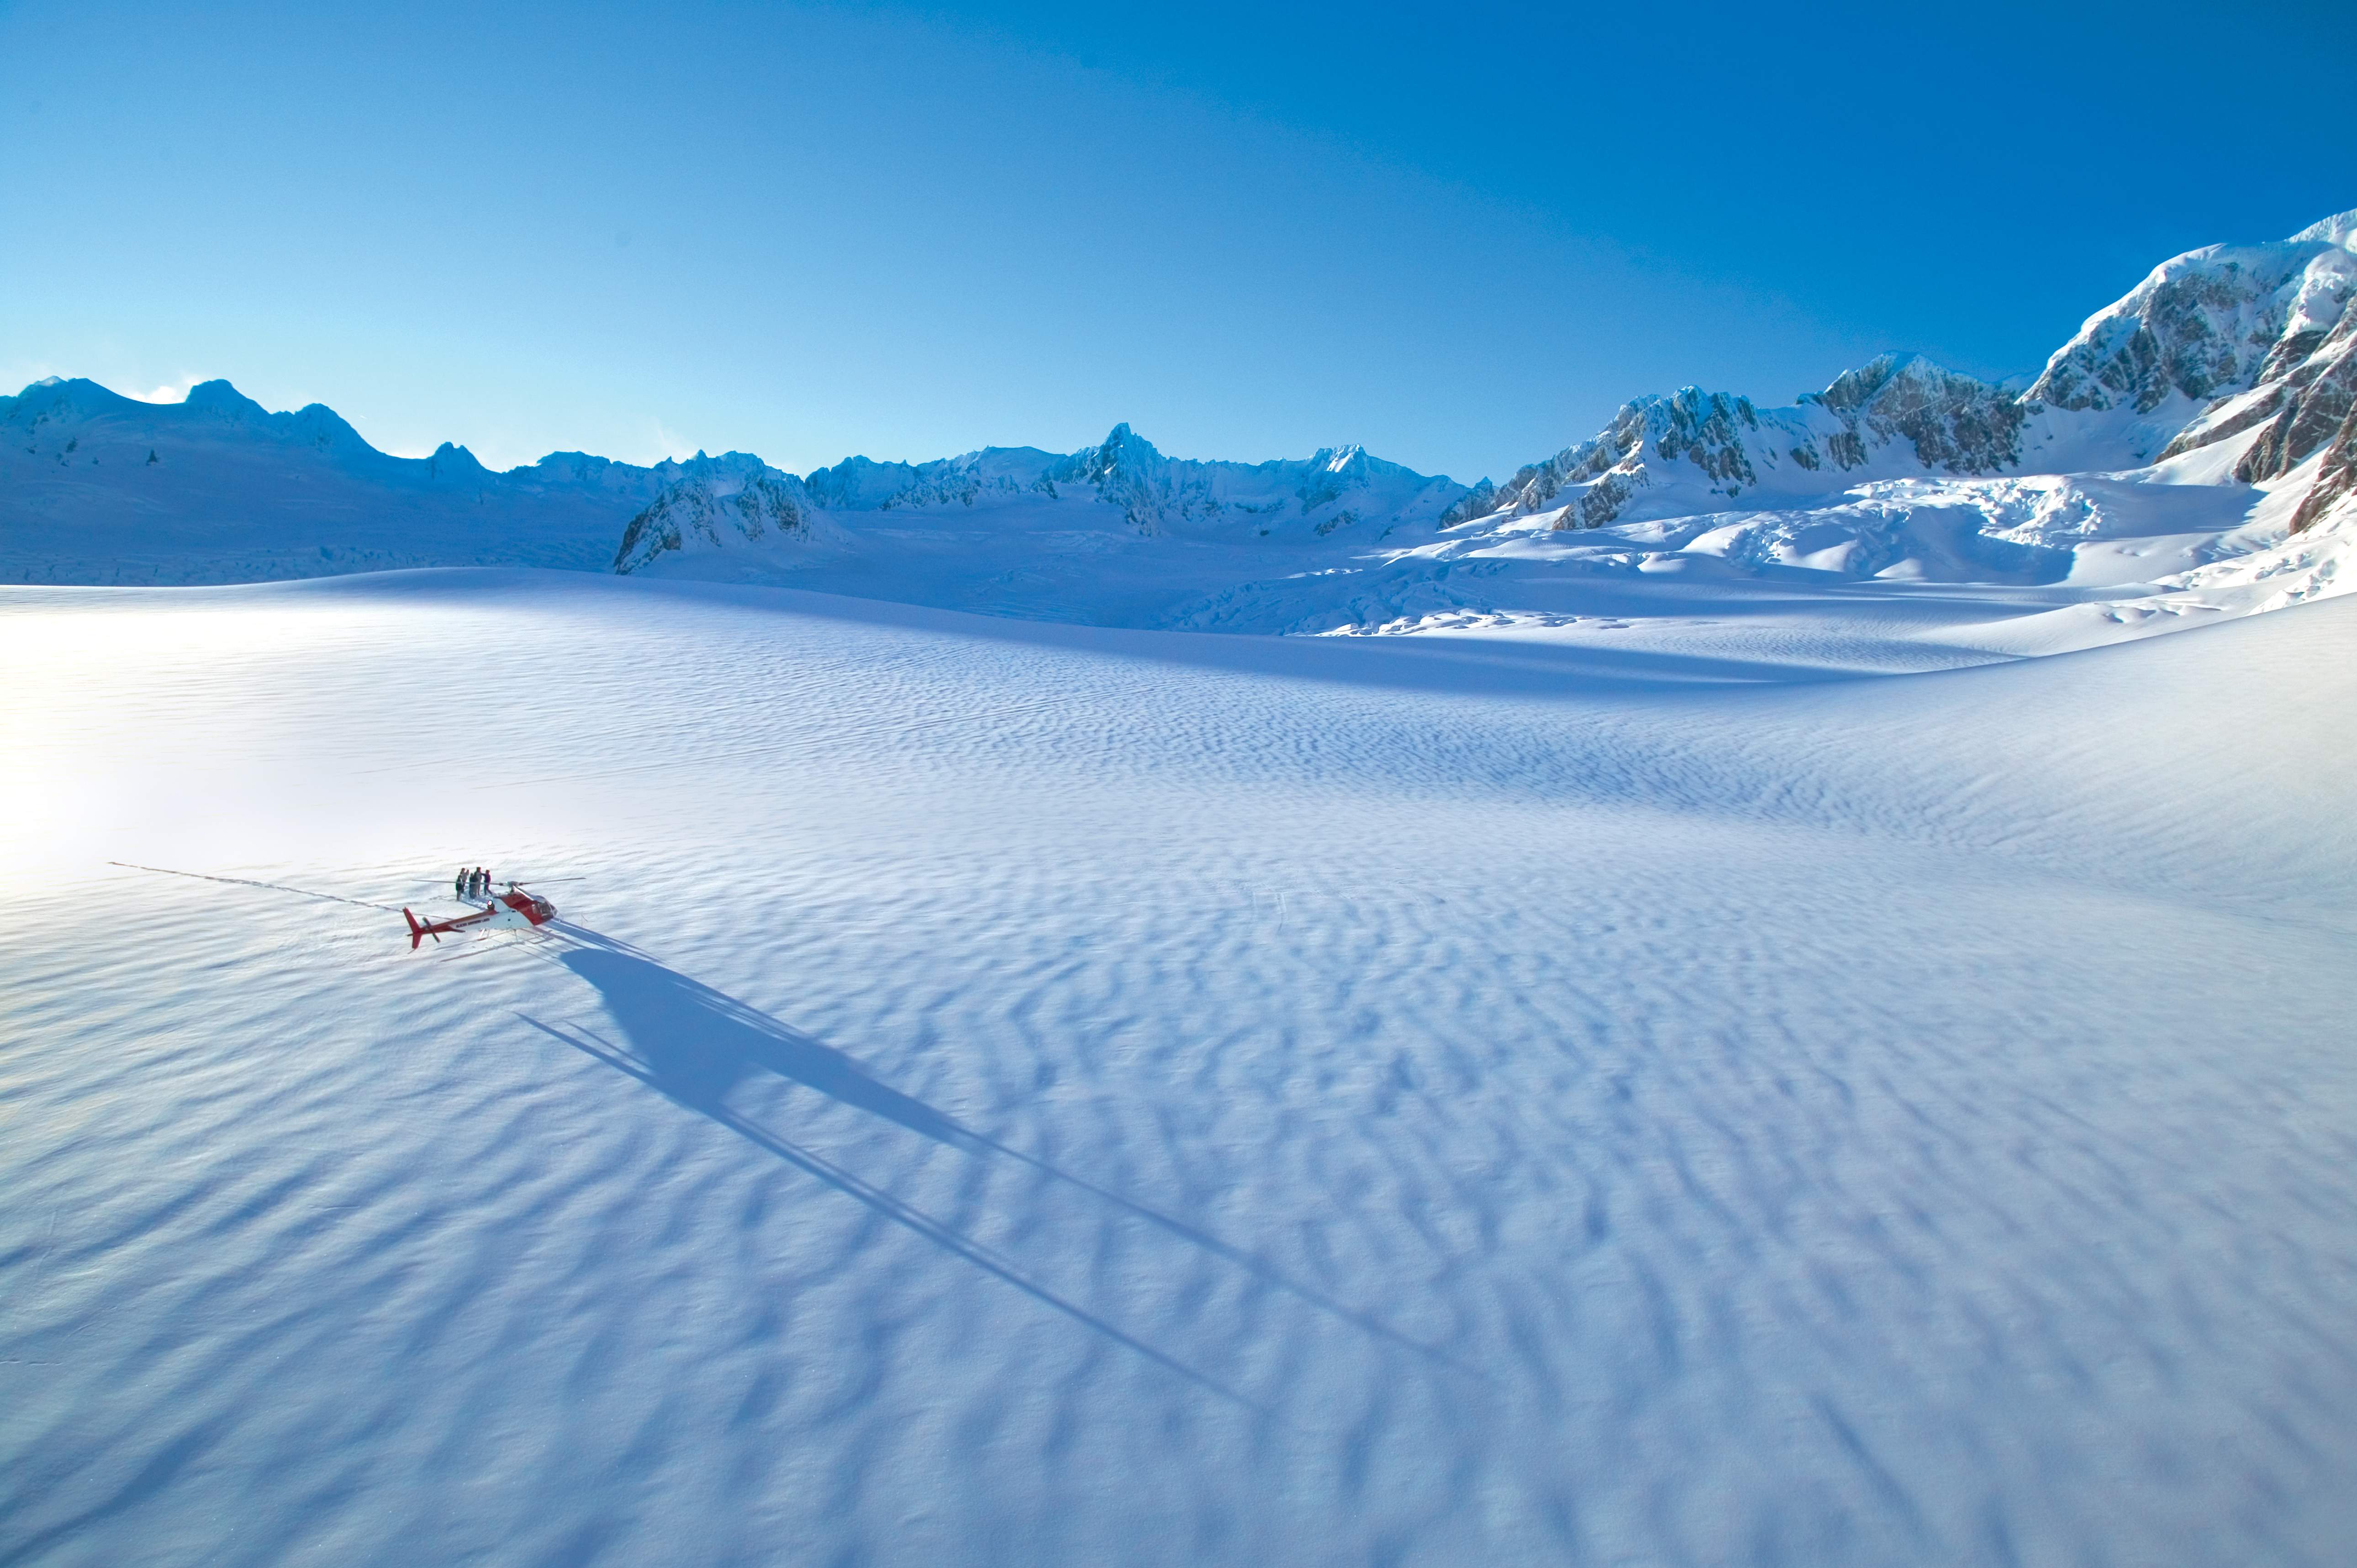 Skyline Enterprises to advance investigations for a Franz Josef Glacier gondola